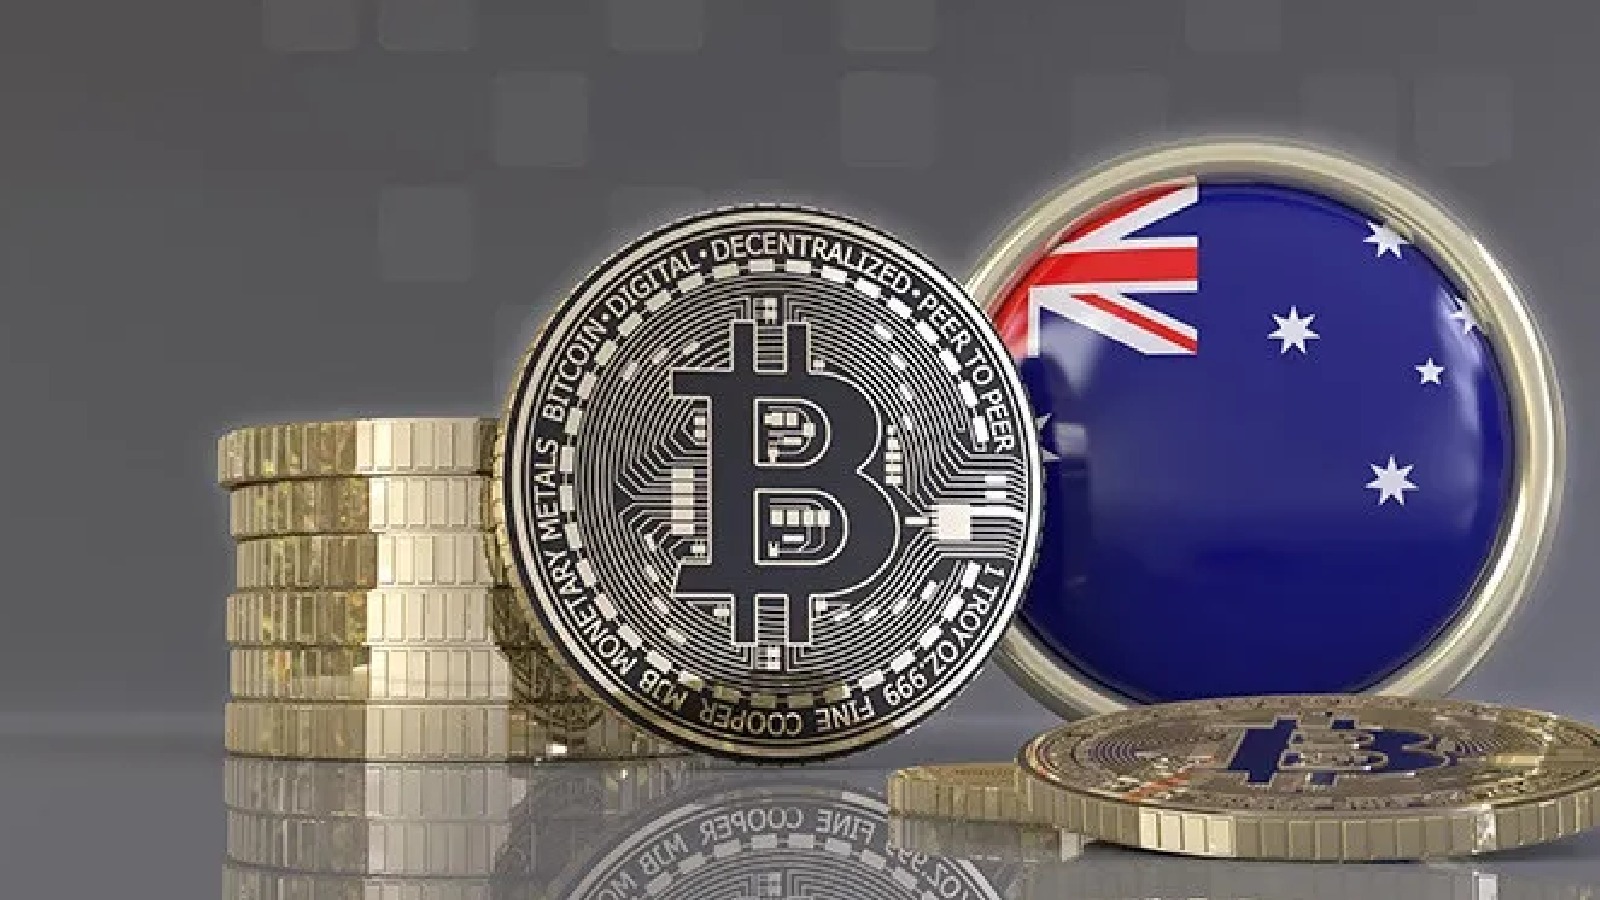 easy markets australia trade cryptocurrency